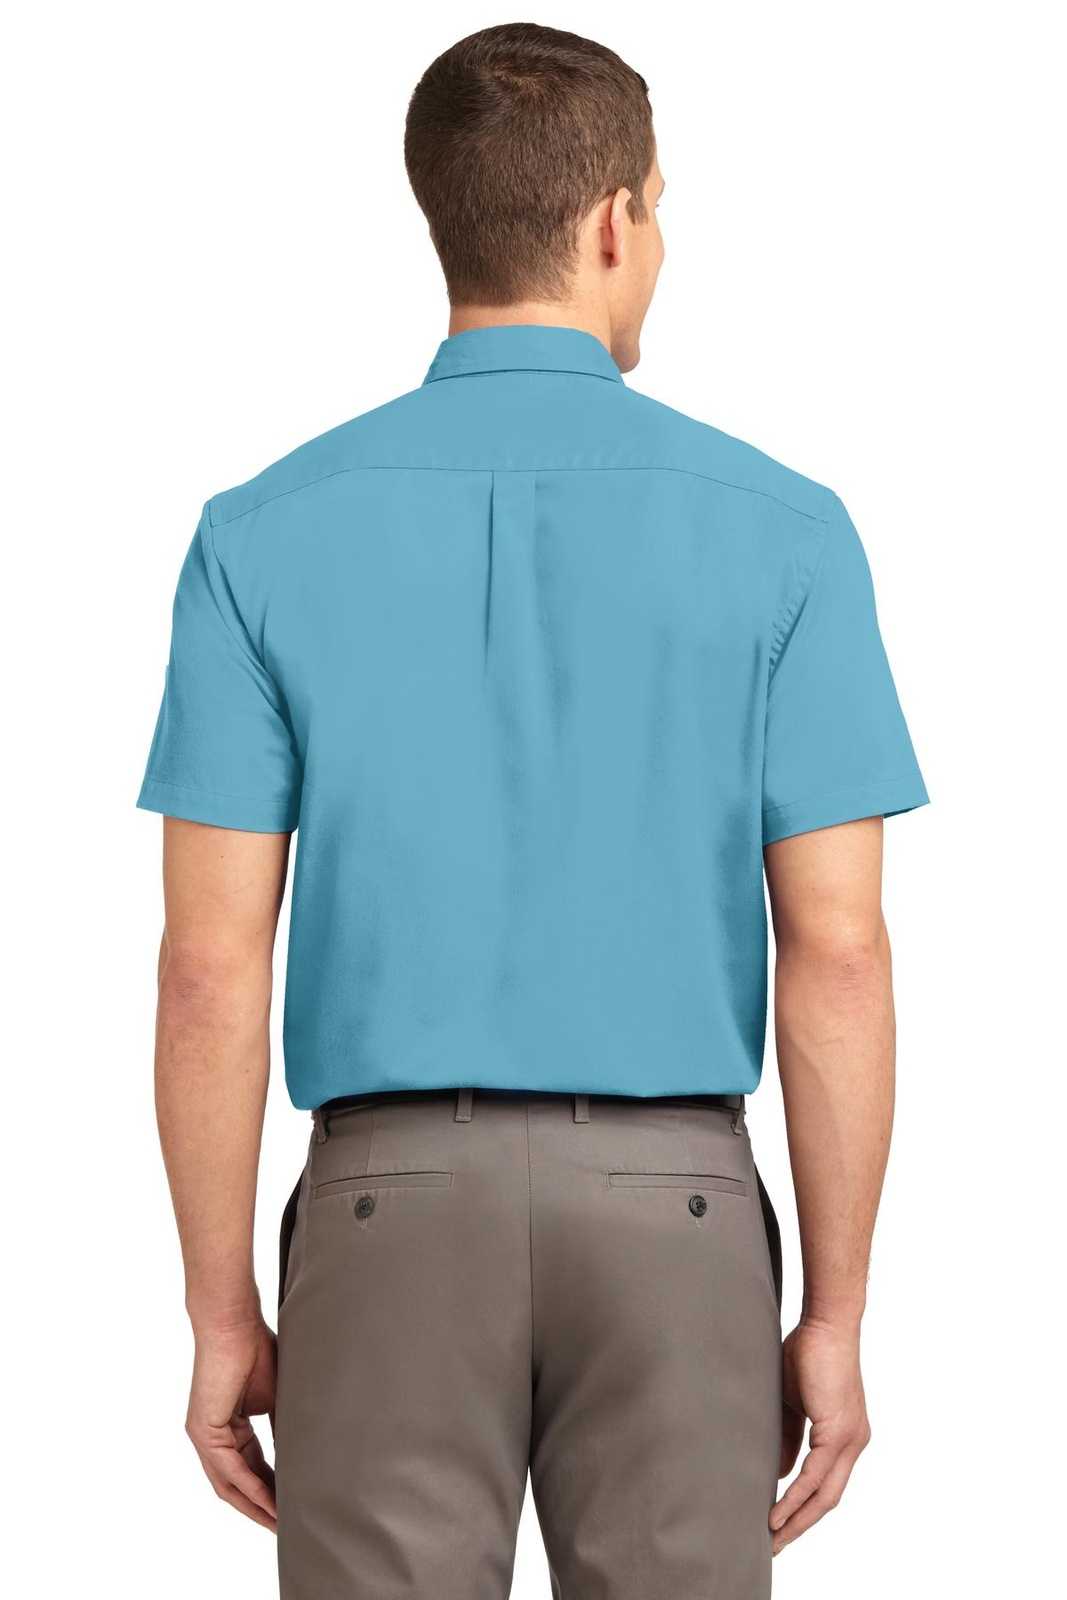 Port Authority TLS508 Tall Short Sleeve Easy Care Shirt - Maui Blue - HIT a Double - 1